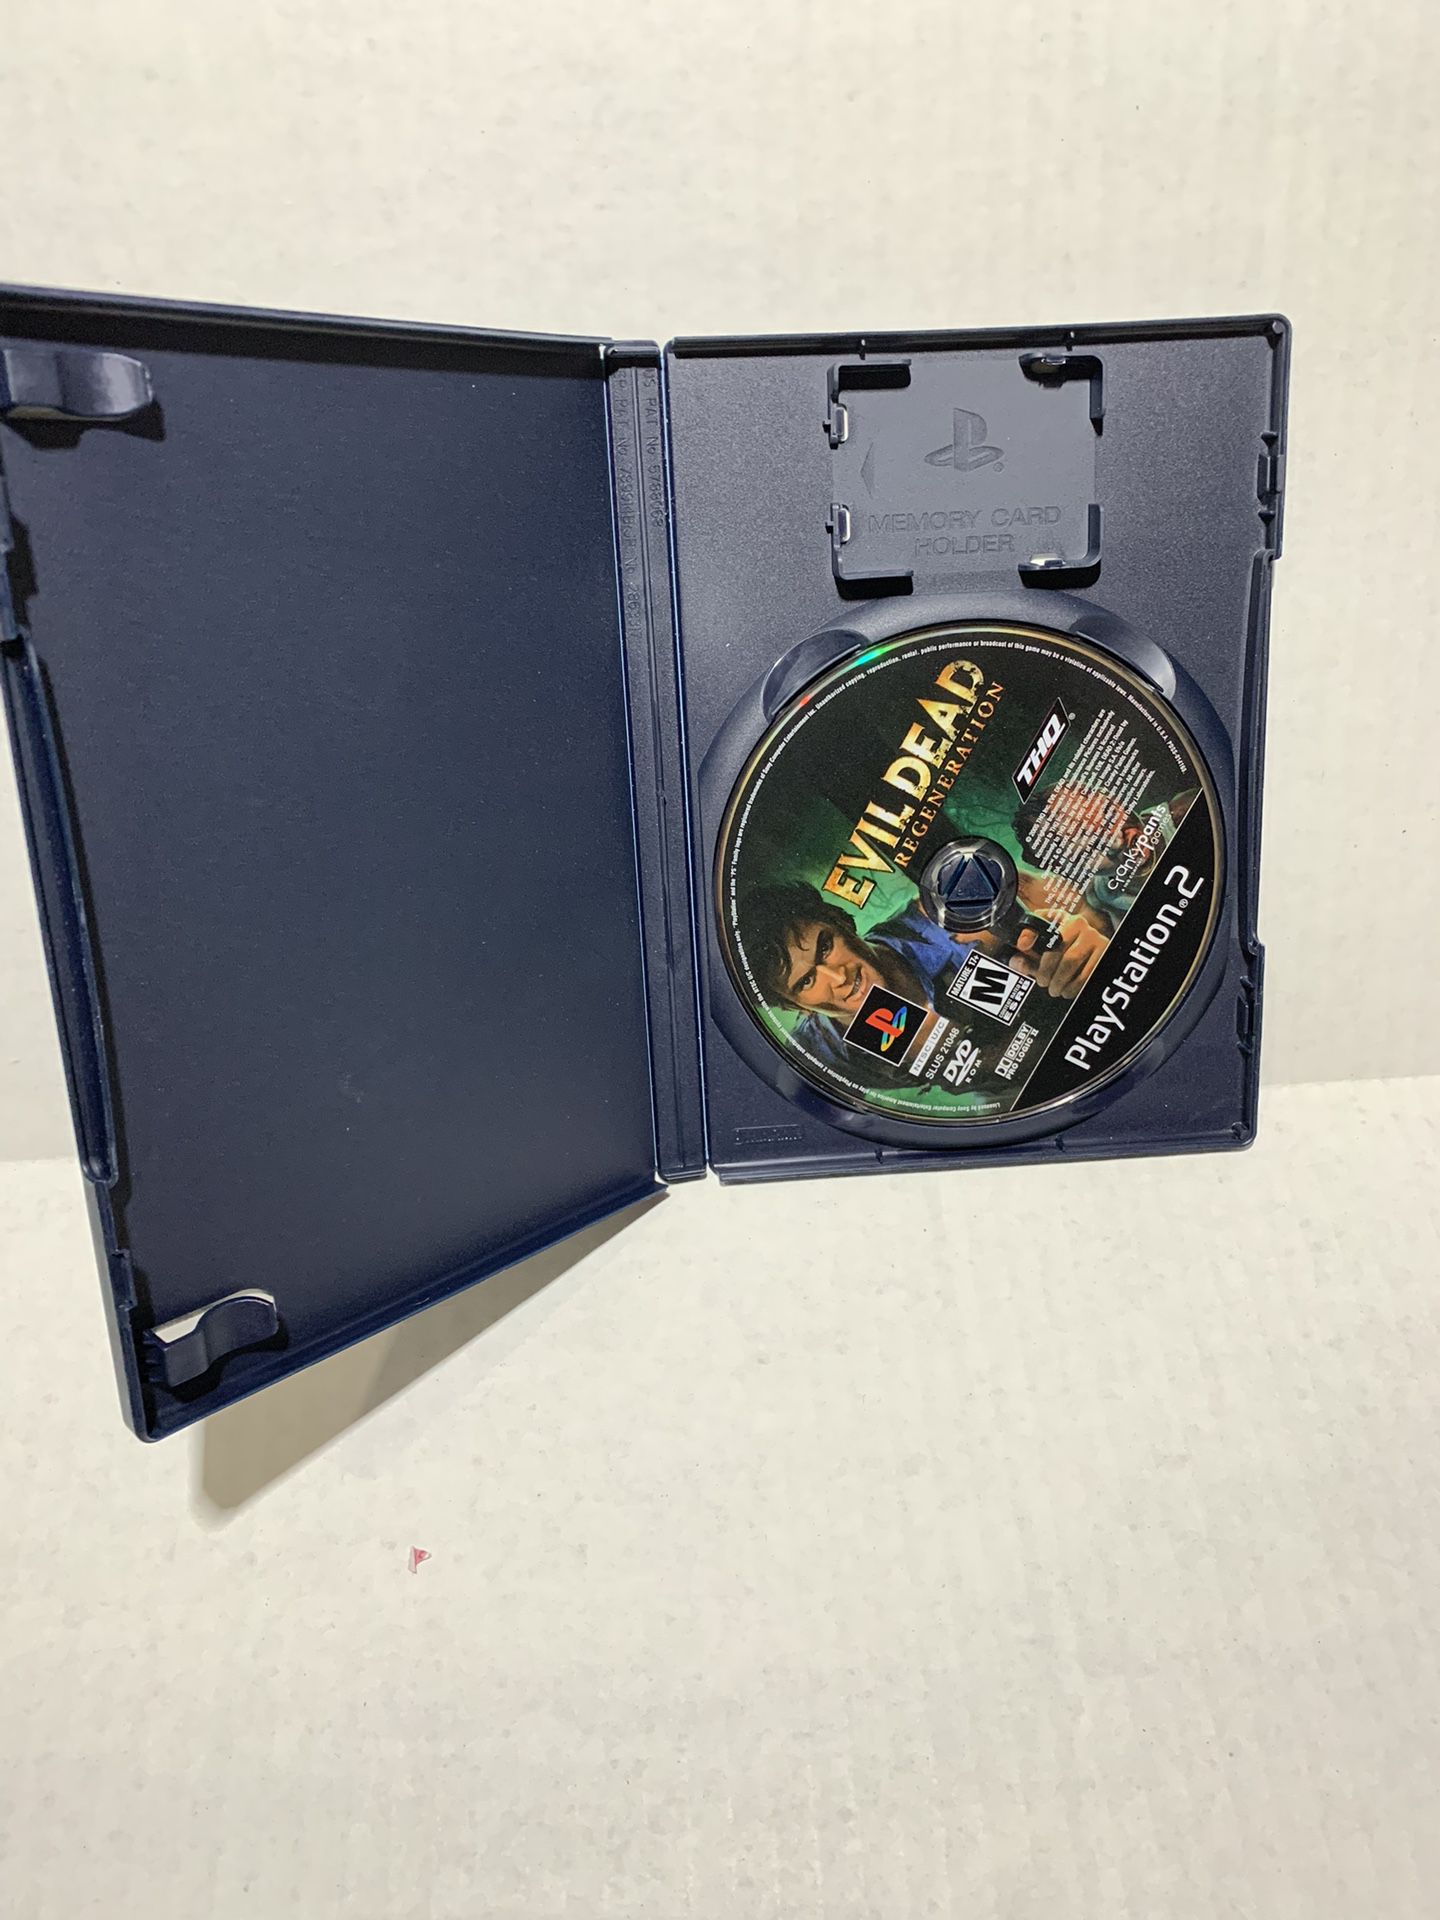 Evil Dead: Regeneration Sony PlayStation 2 game (PS2)